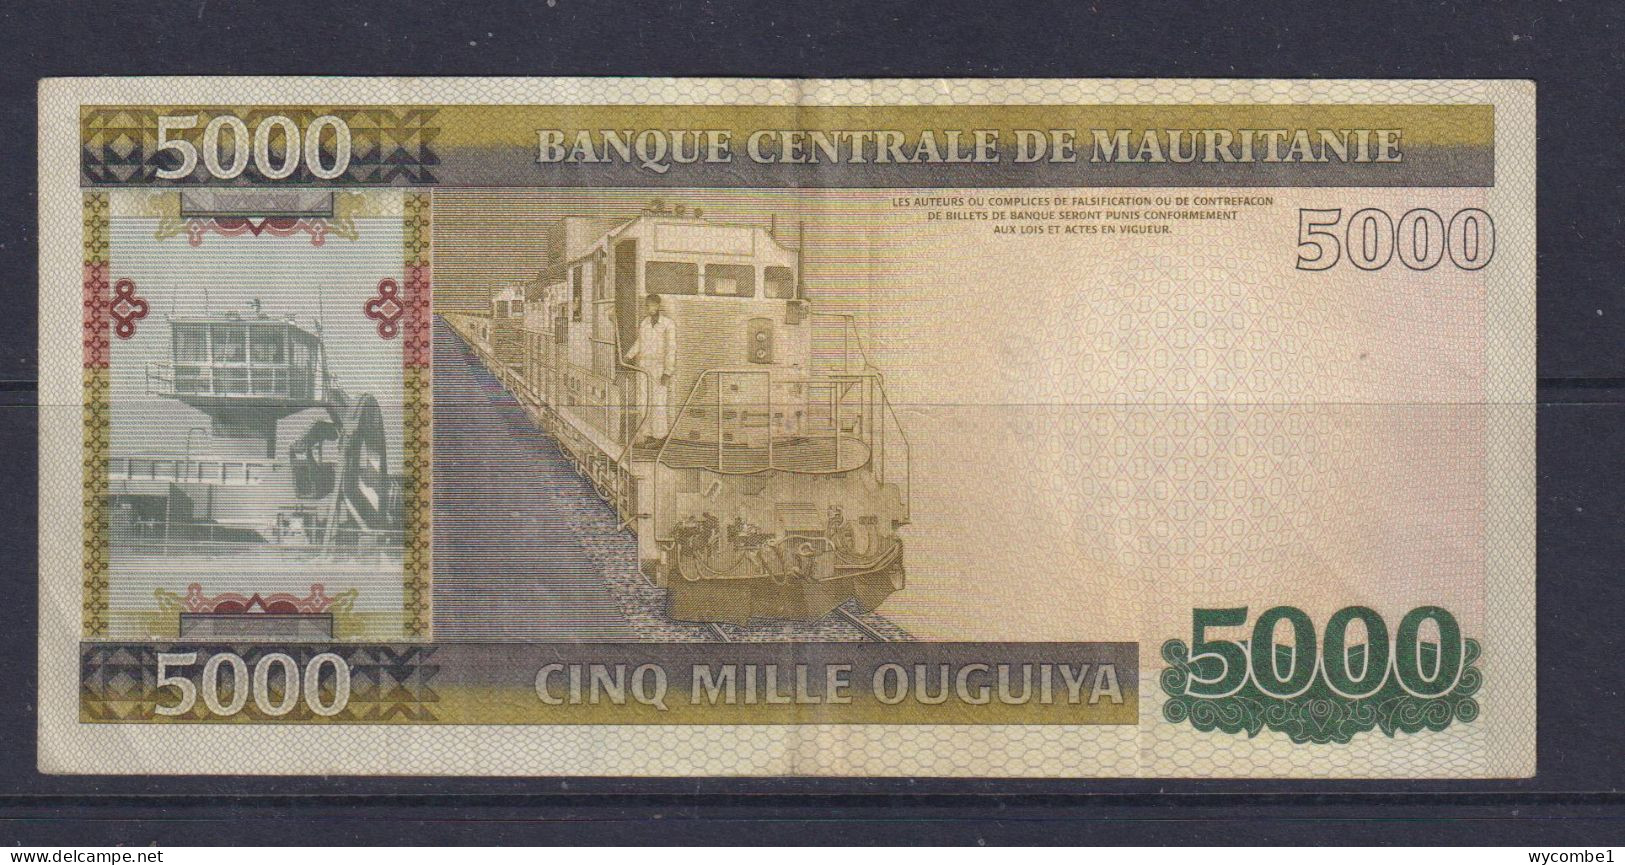 MAURITANIA - 2011 5000 Ouguiya Circulated Banknote - Mauritania